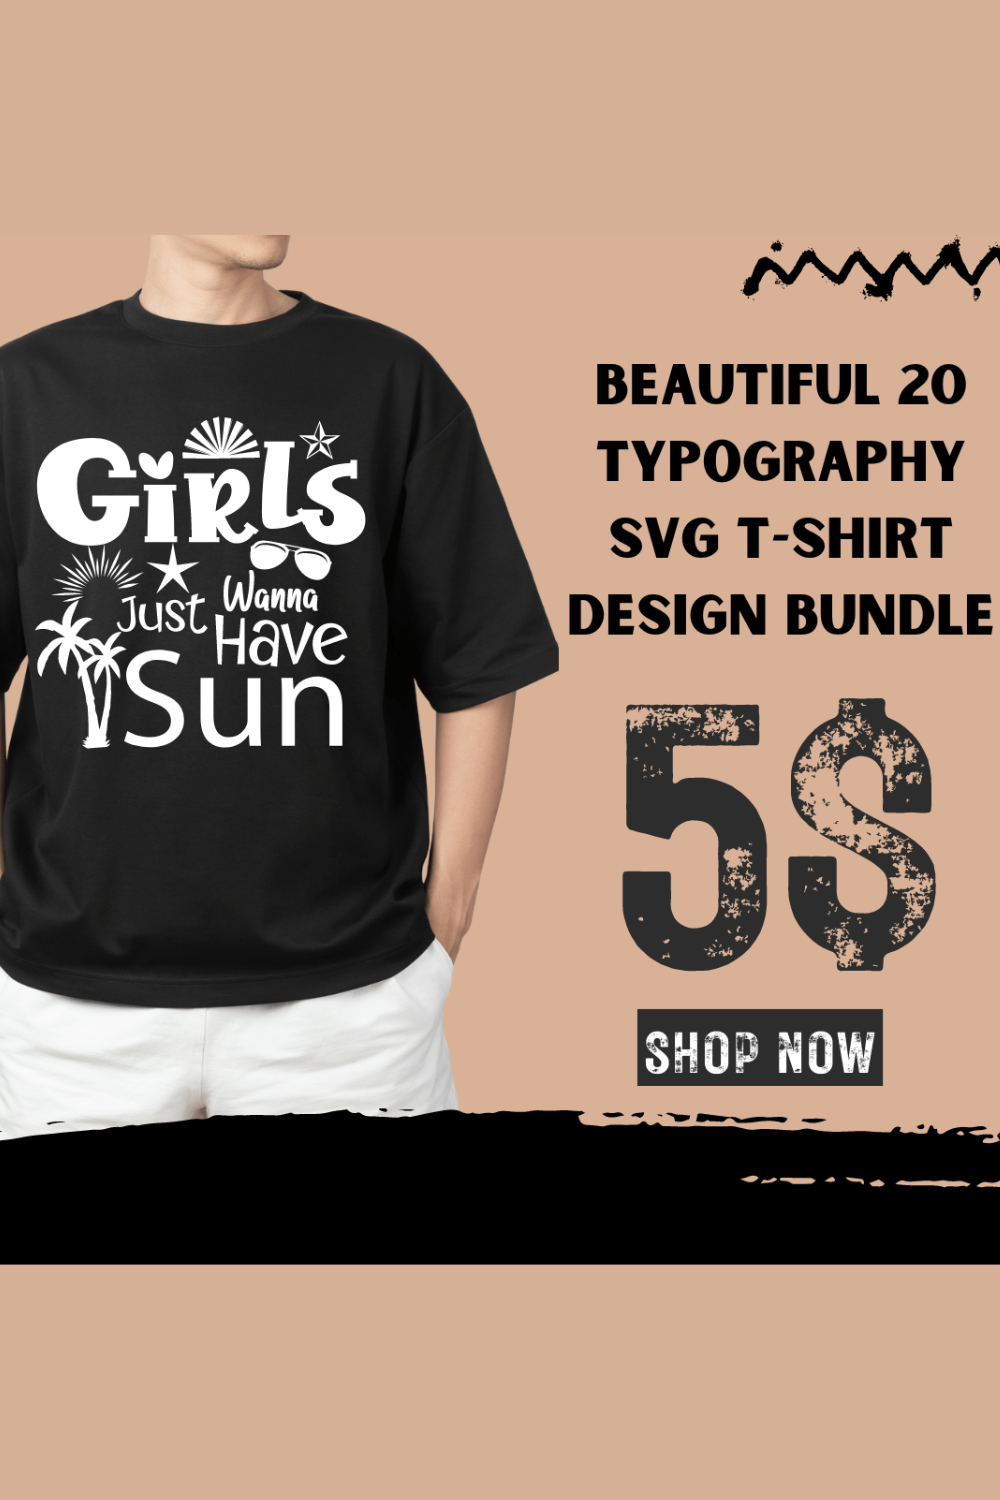 Beautiful T-shirt Typography Eye-catching SVG Design pinterest image.